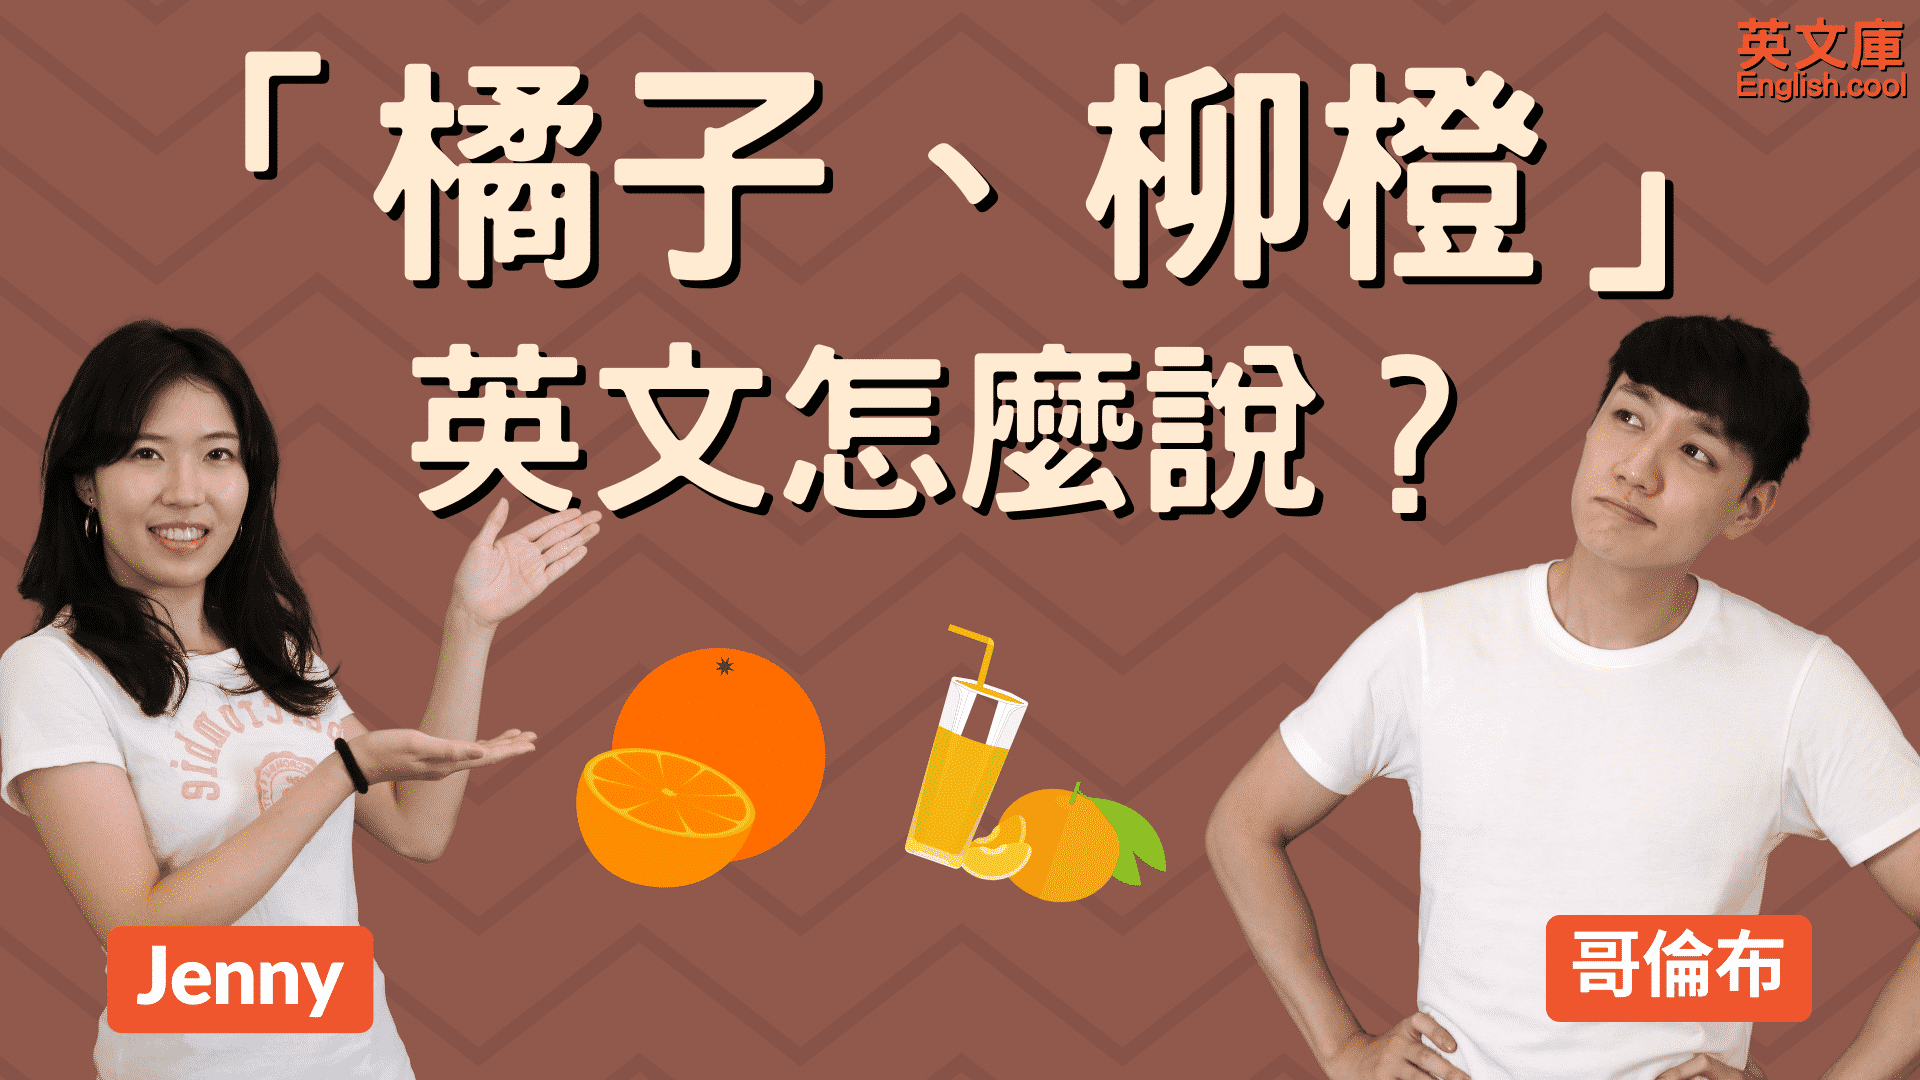 You are currently viewing 橘子、柳橙、柑橘… 等英文是？ Orange? Tangerine?